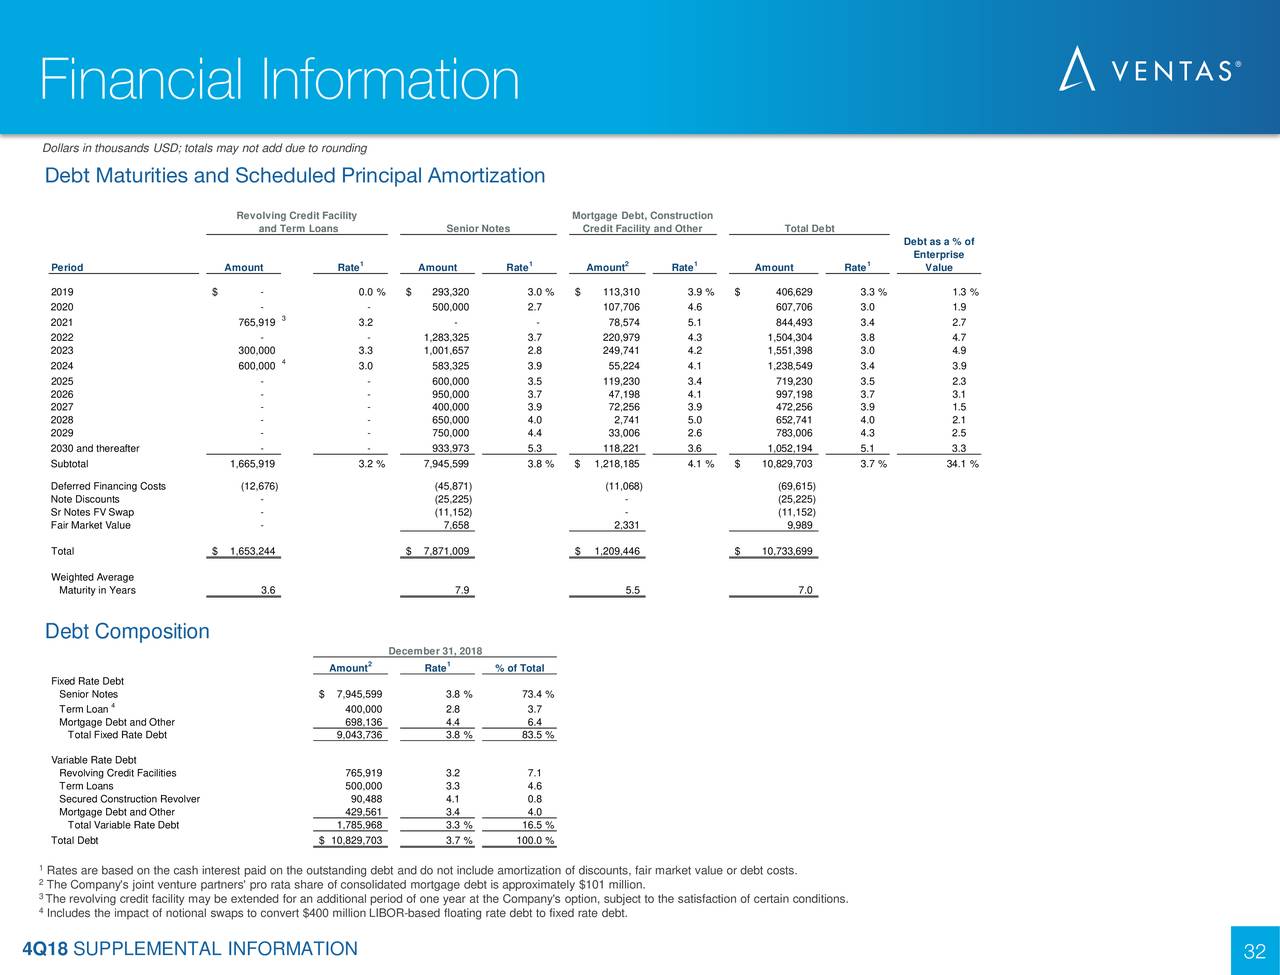 Financial Information